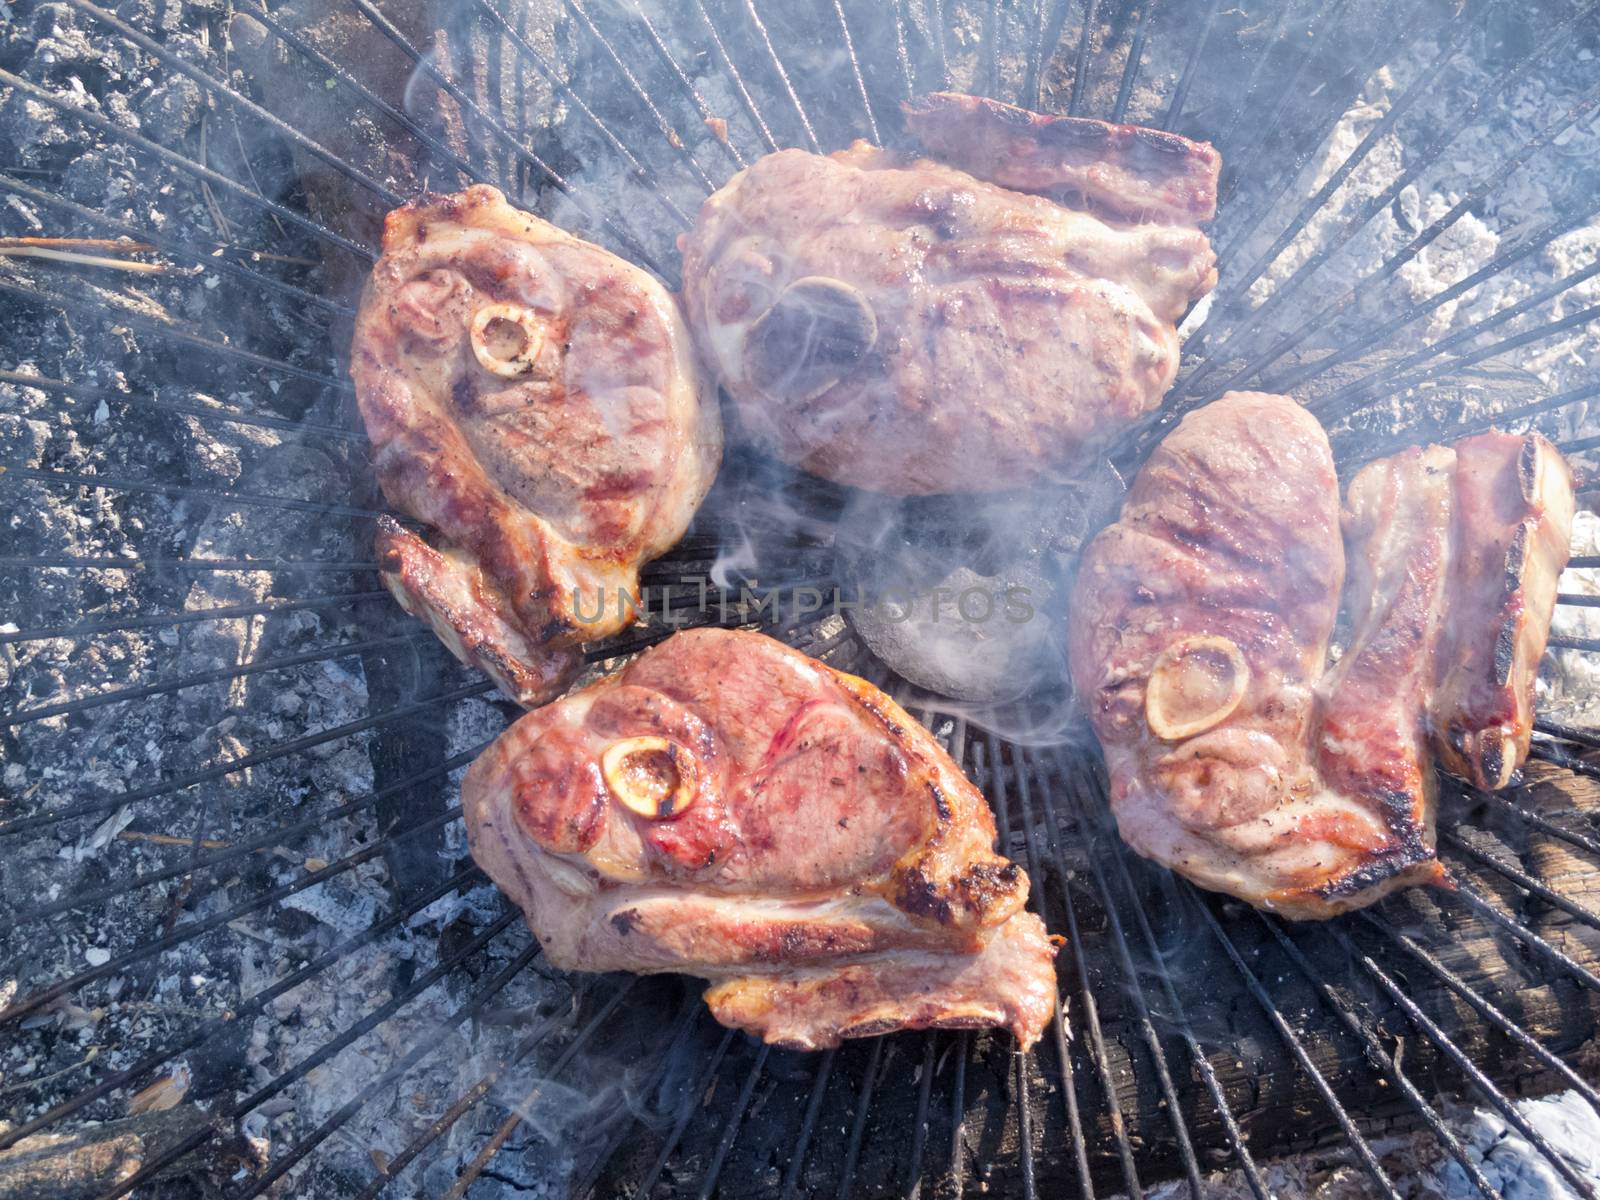 Crispy brown pork meat steaks grill over hot coals of bbq wood fire on metal grate grid